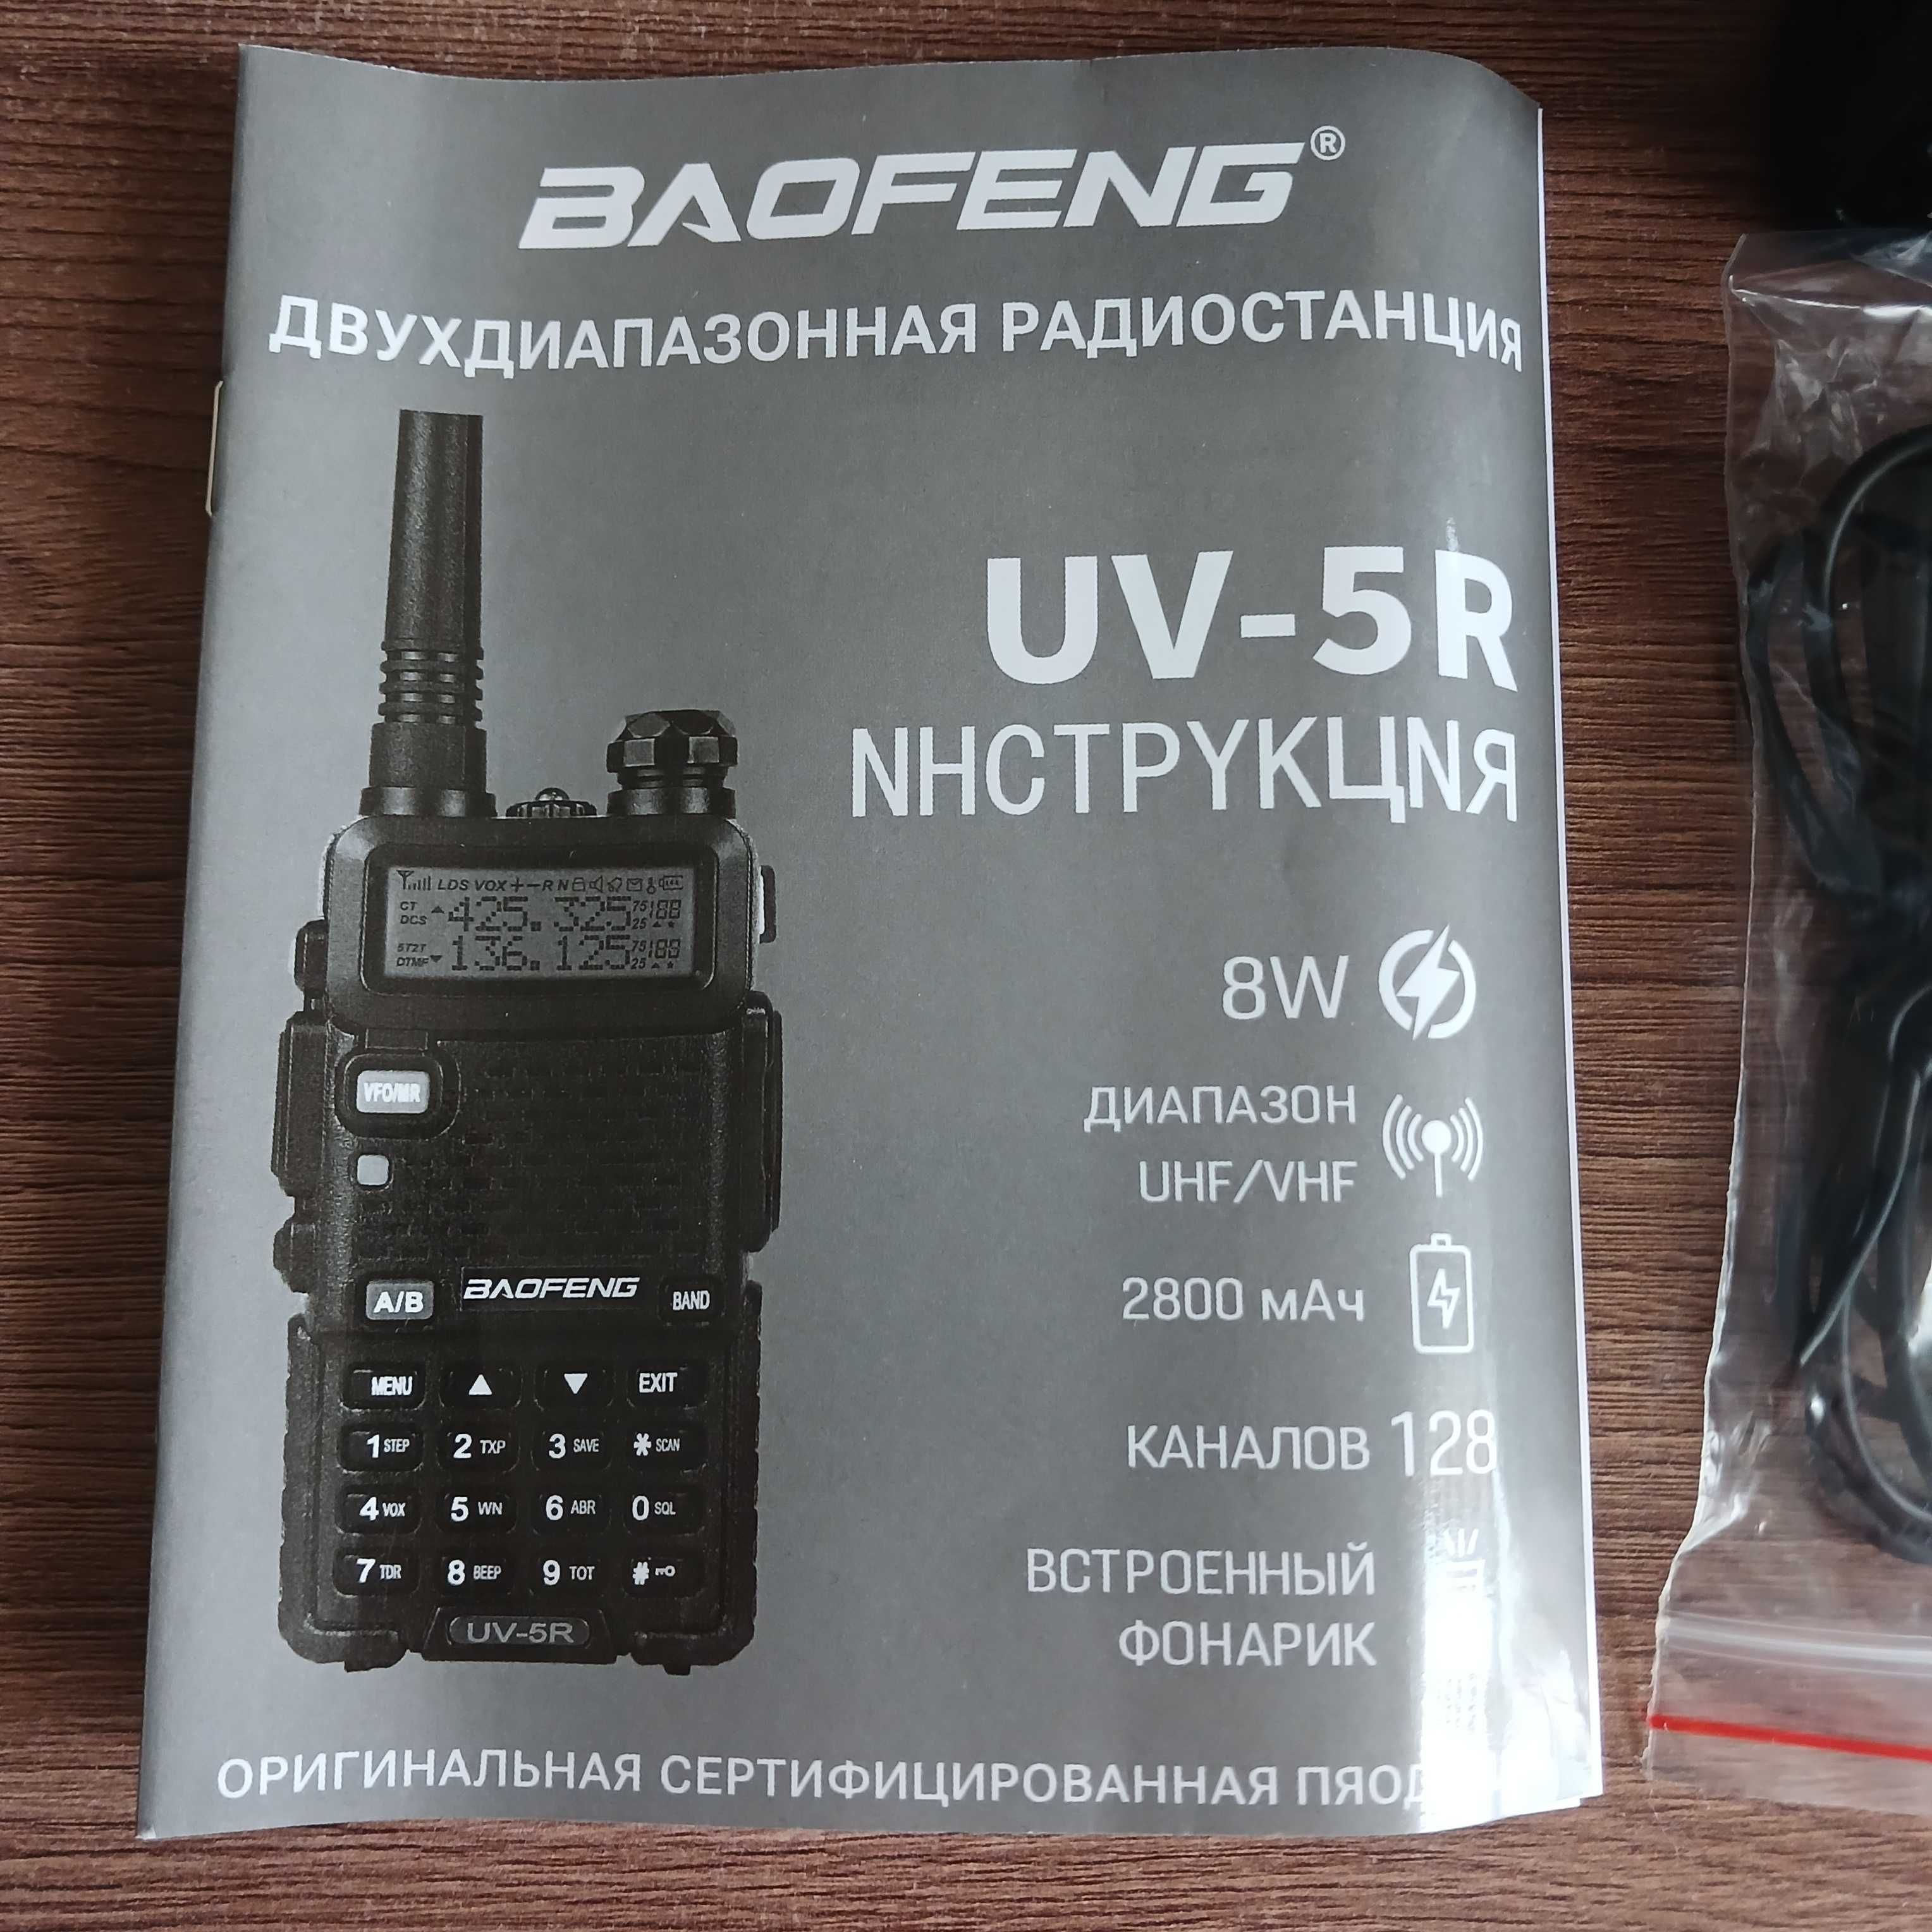 Радиосанция baofering uv-5r 8w